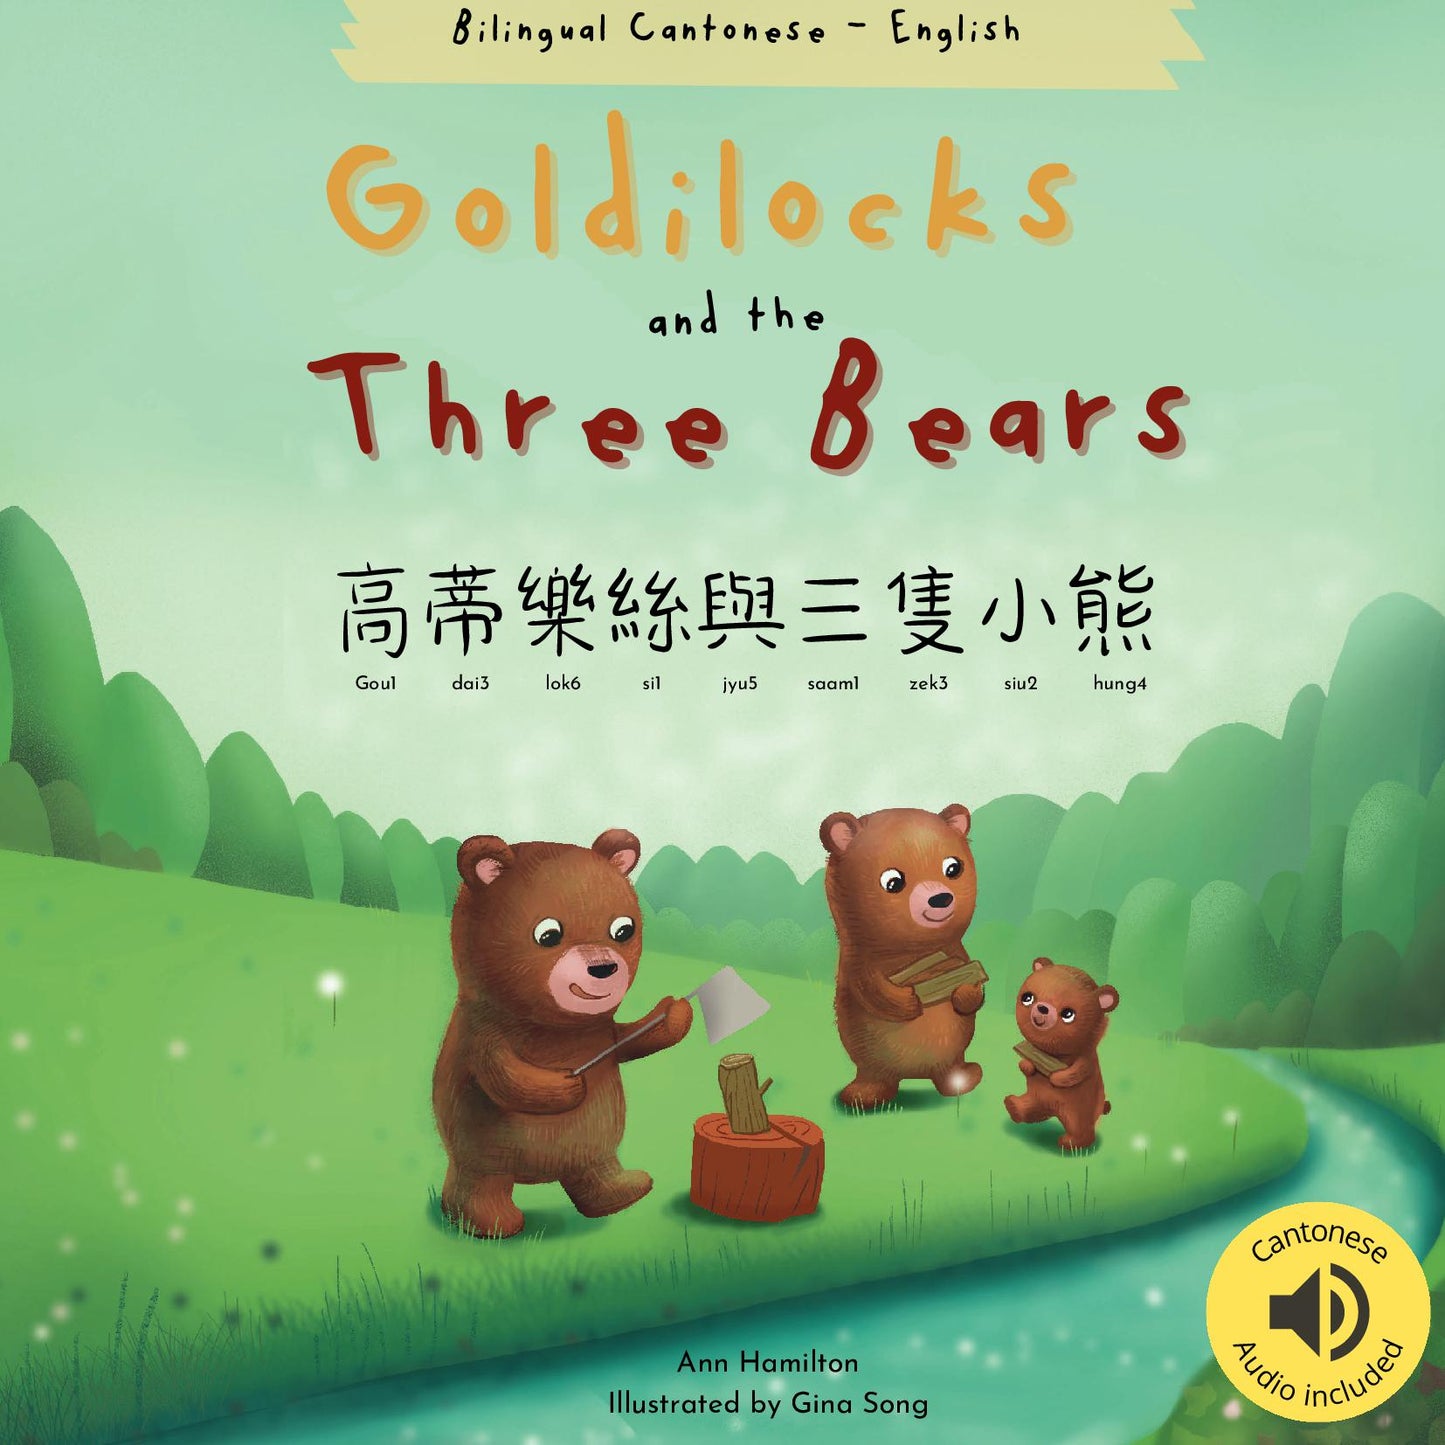 Goldilocks and the Three Bears 高蒂樂絲與三隻小熊 Bilingual Cantonese - English Edition